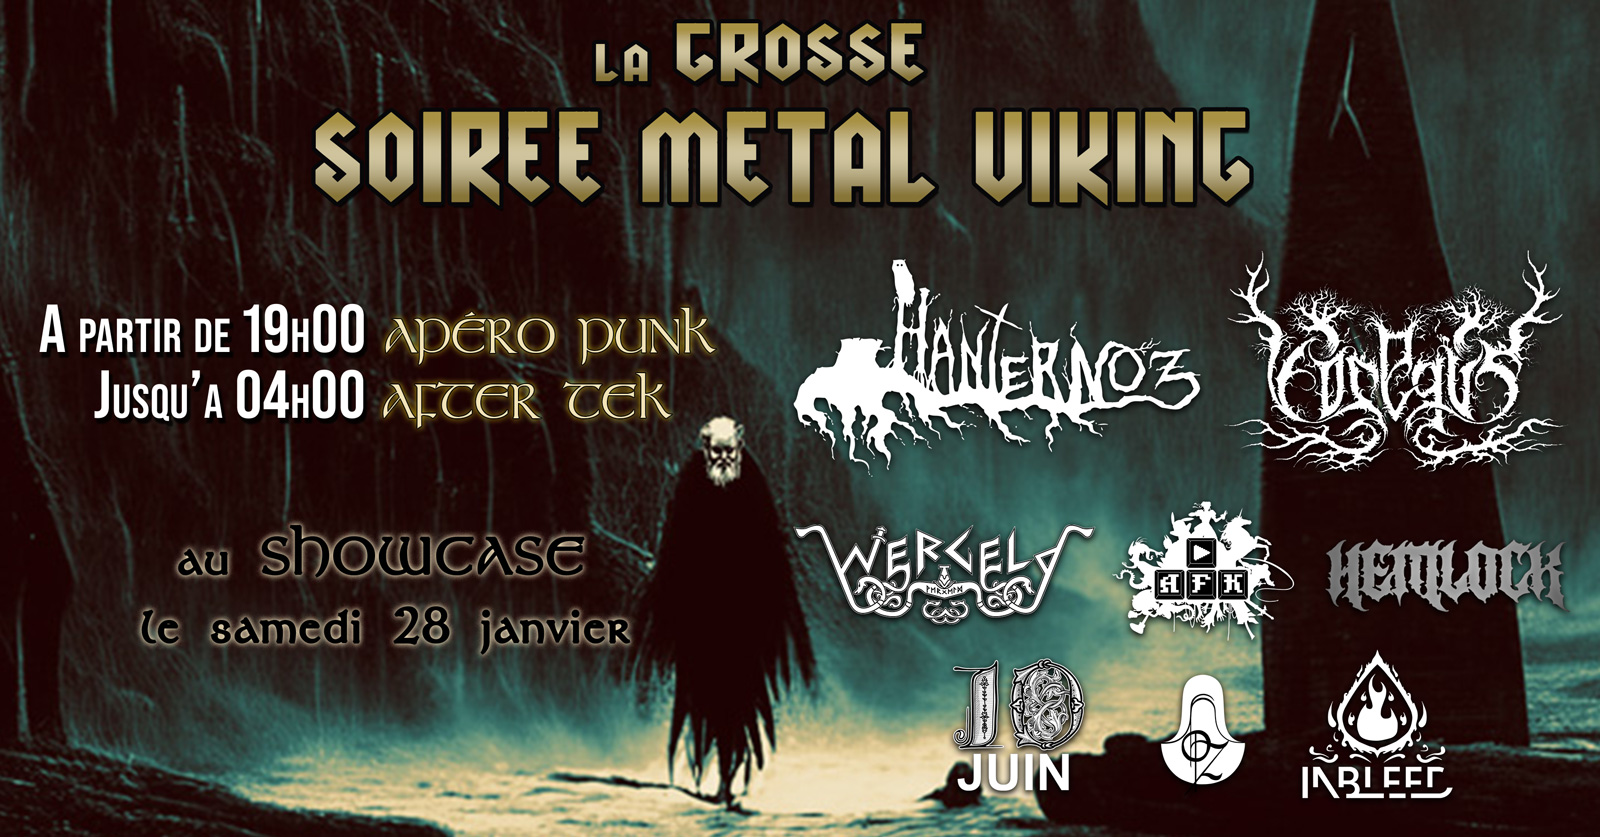 La Grosse Soirée Metal Viking // Angoulême